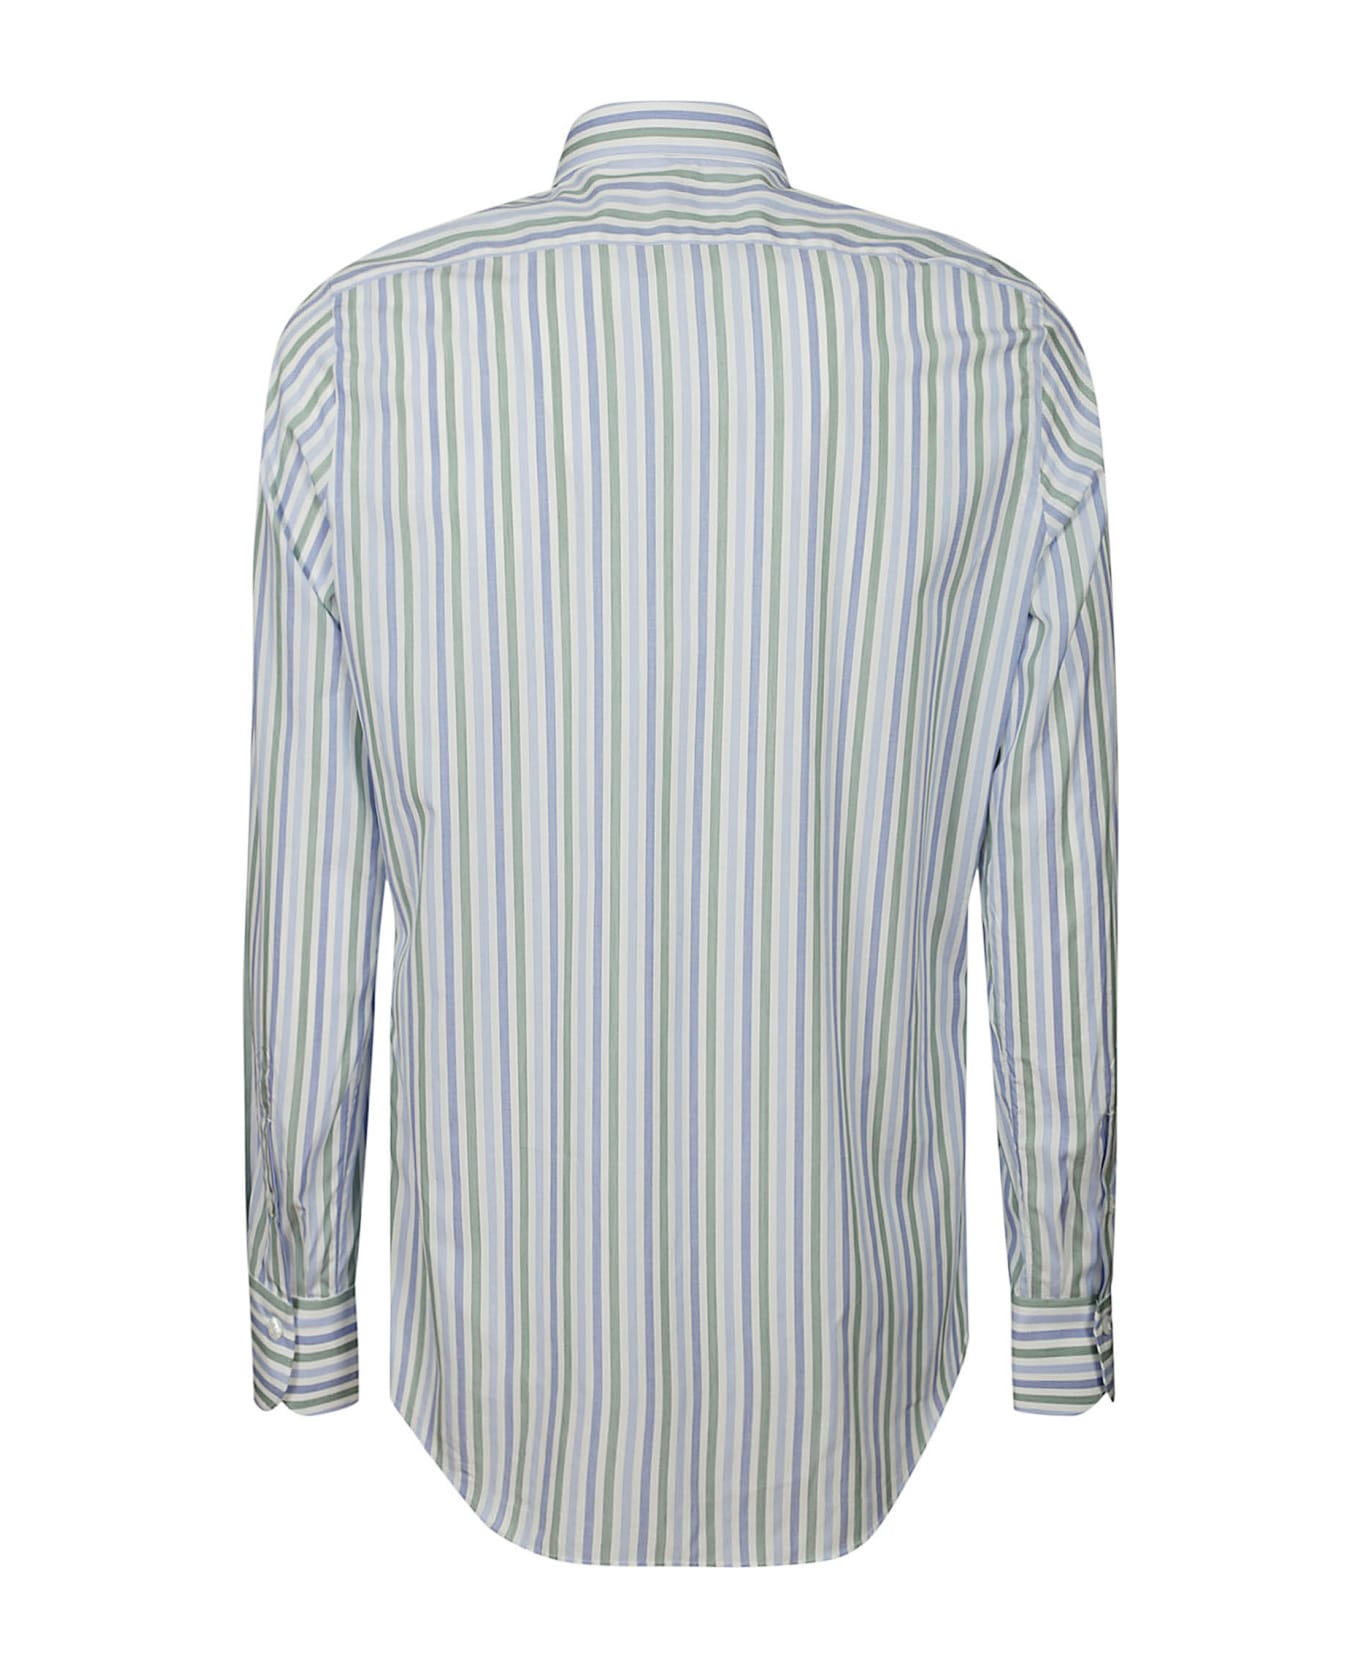 Finamore Shirt 170.2 - Stripes